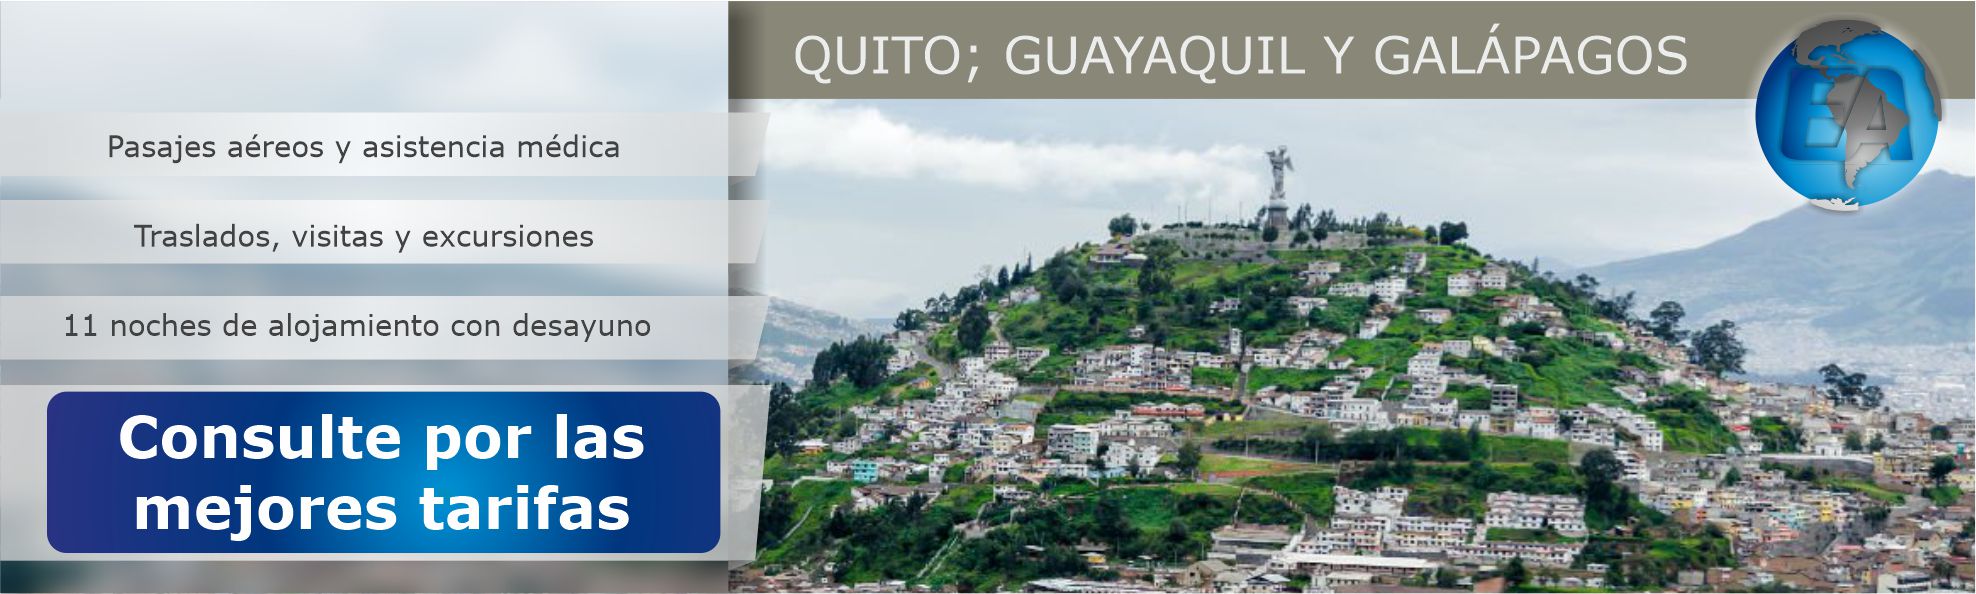 QUITO-GUAYAQUIL Y GALAPAGOS